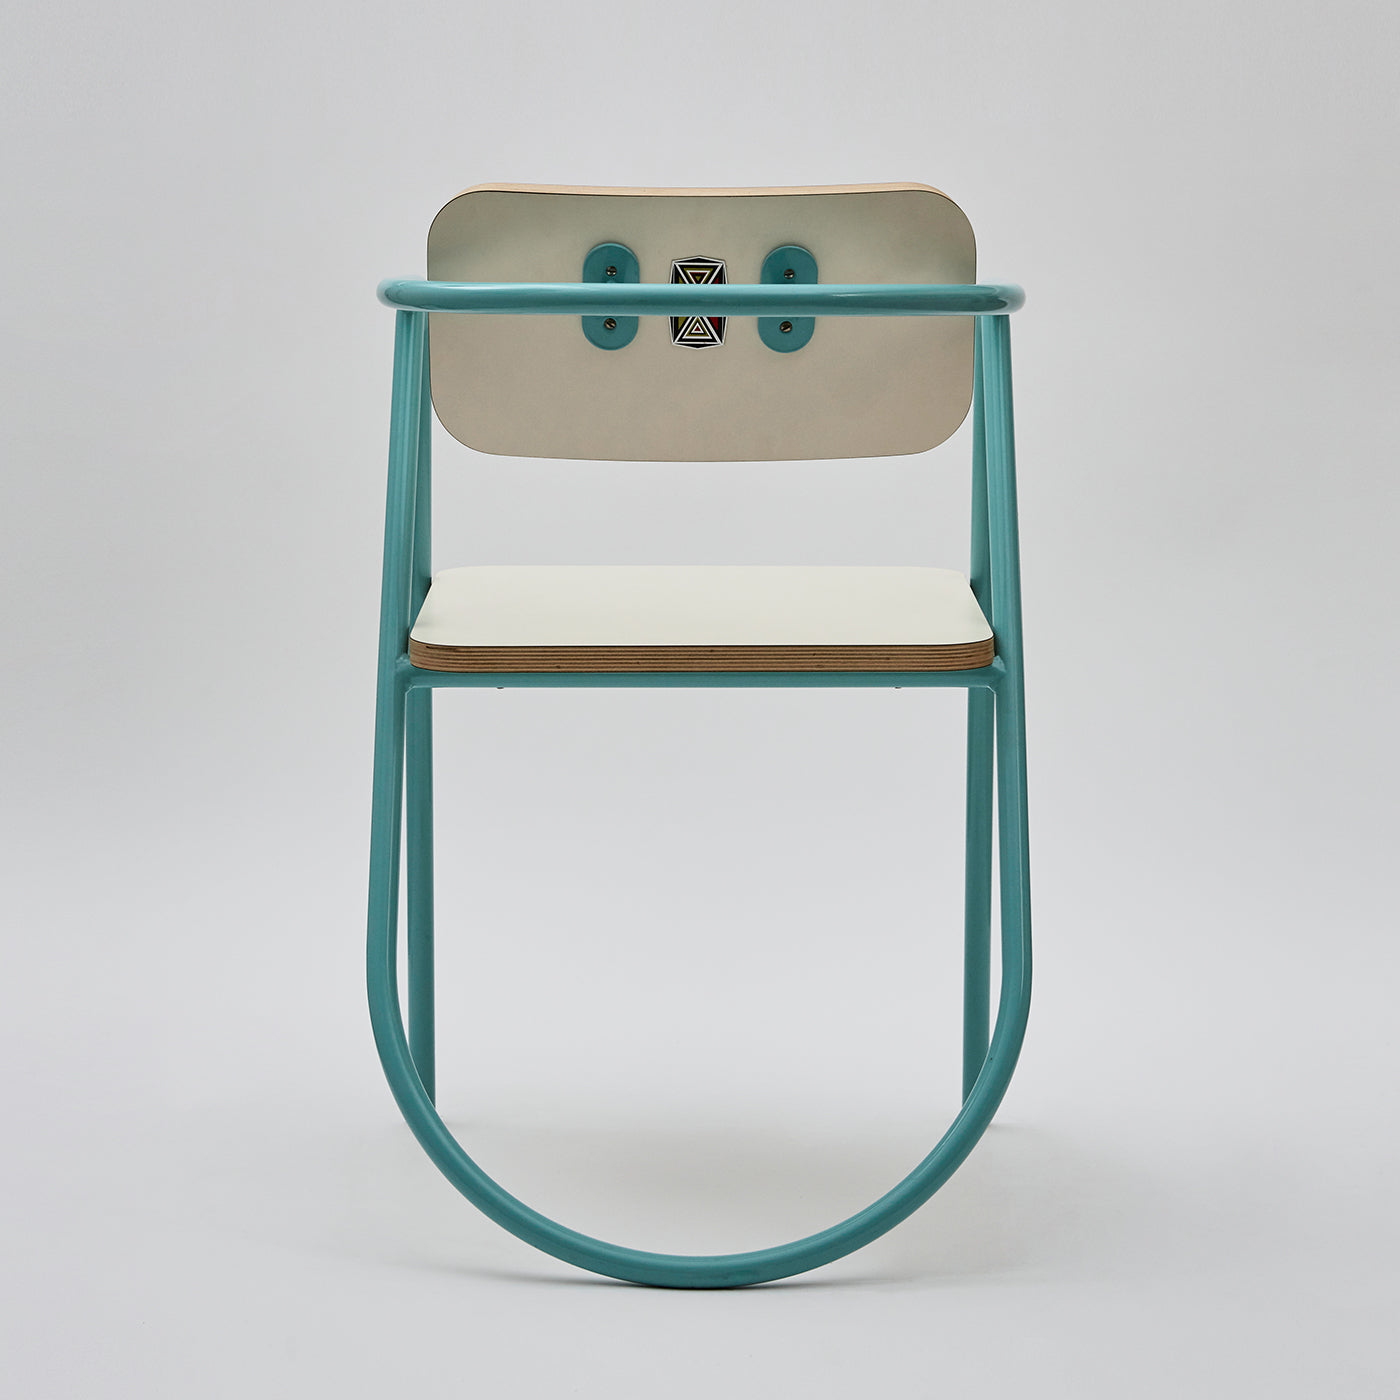 La Misciù Light-Blue Chair - Alternative view 1